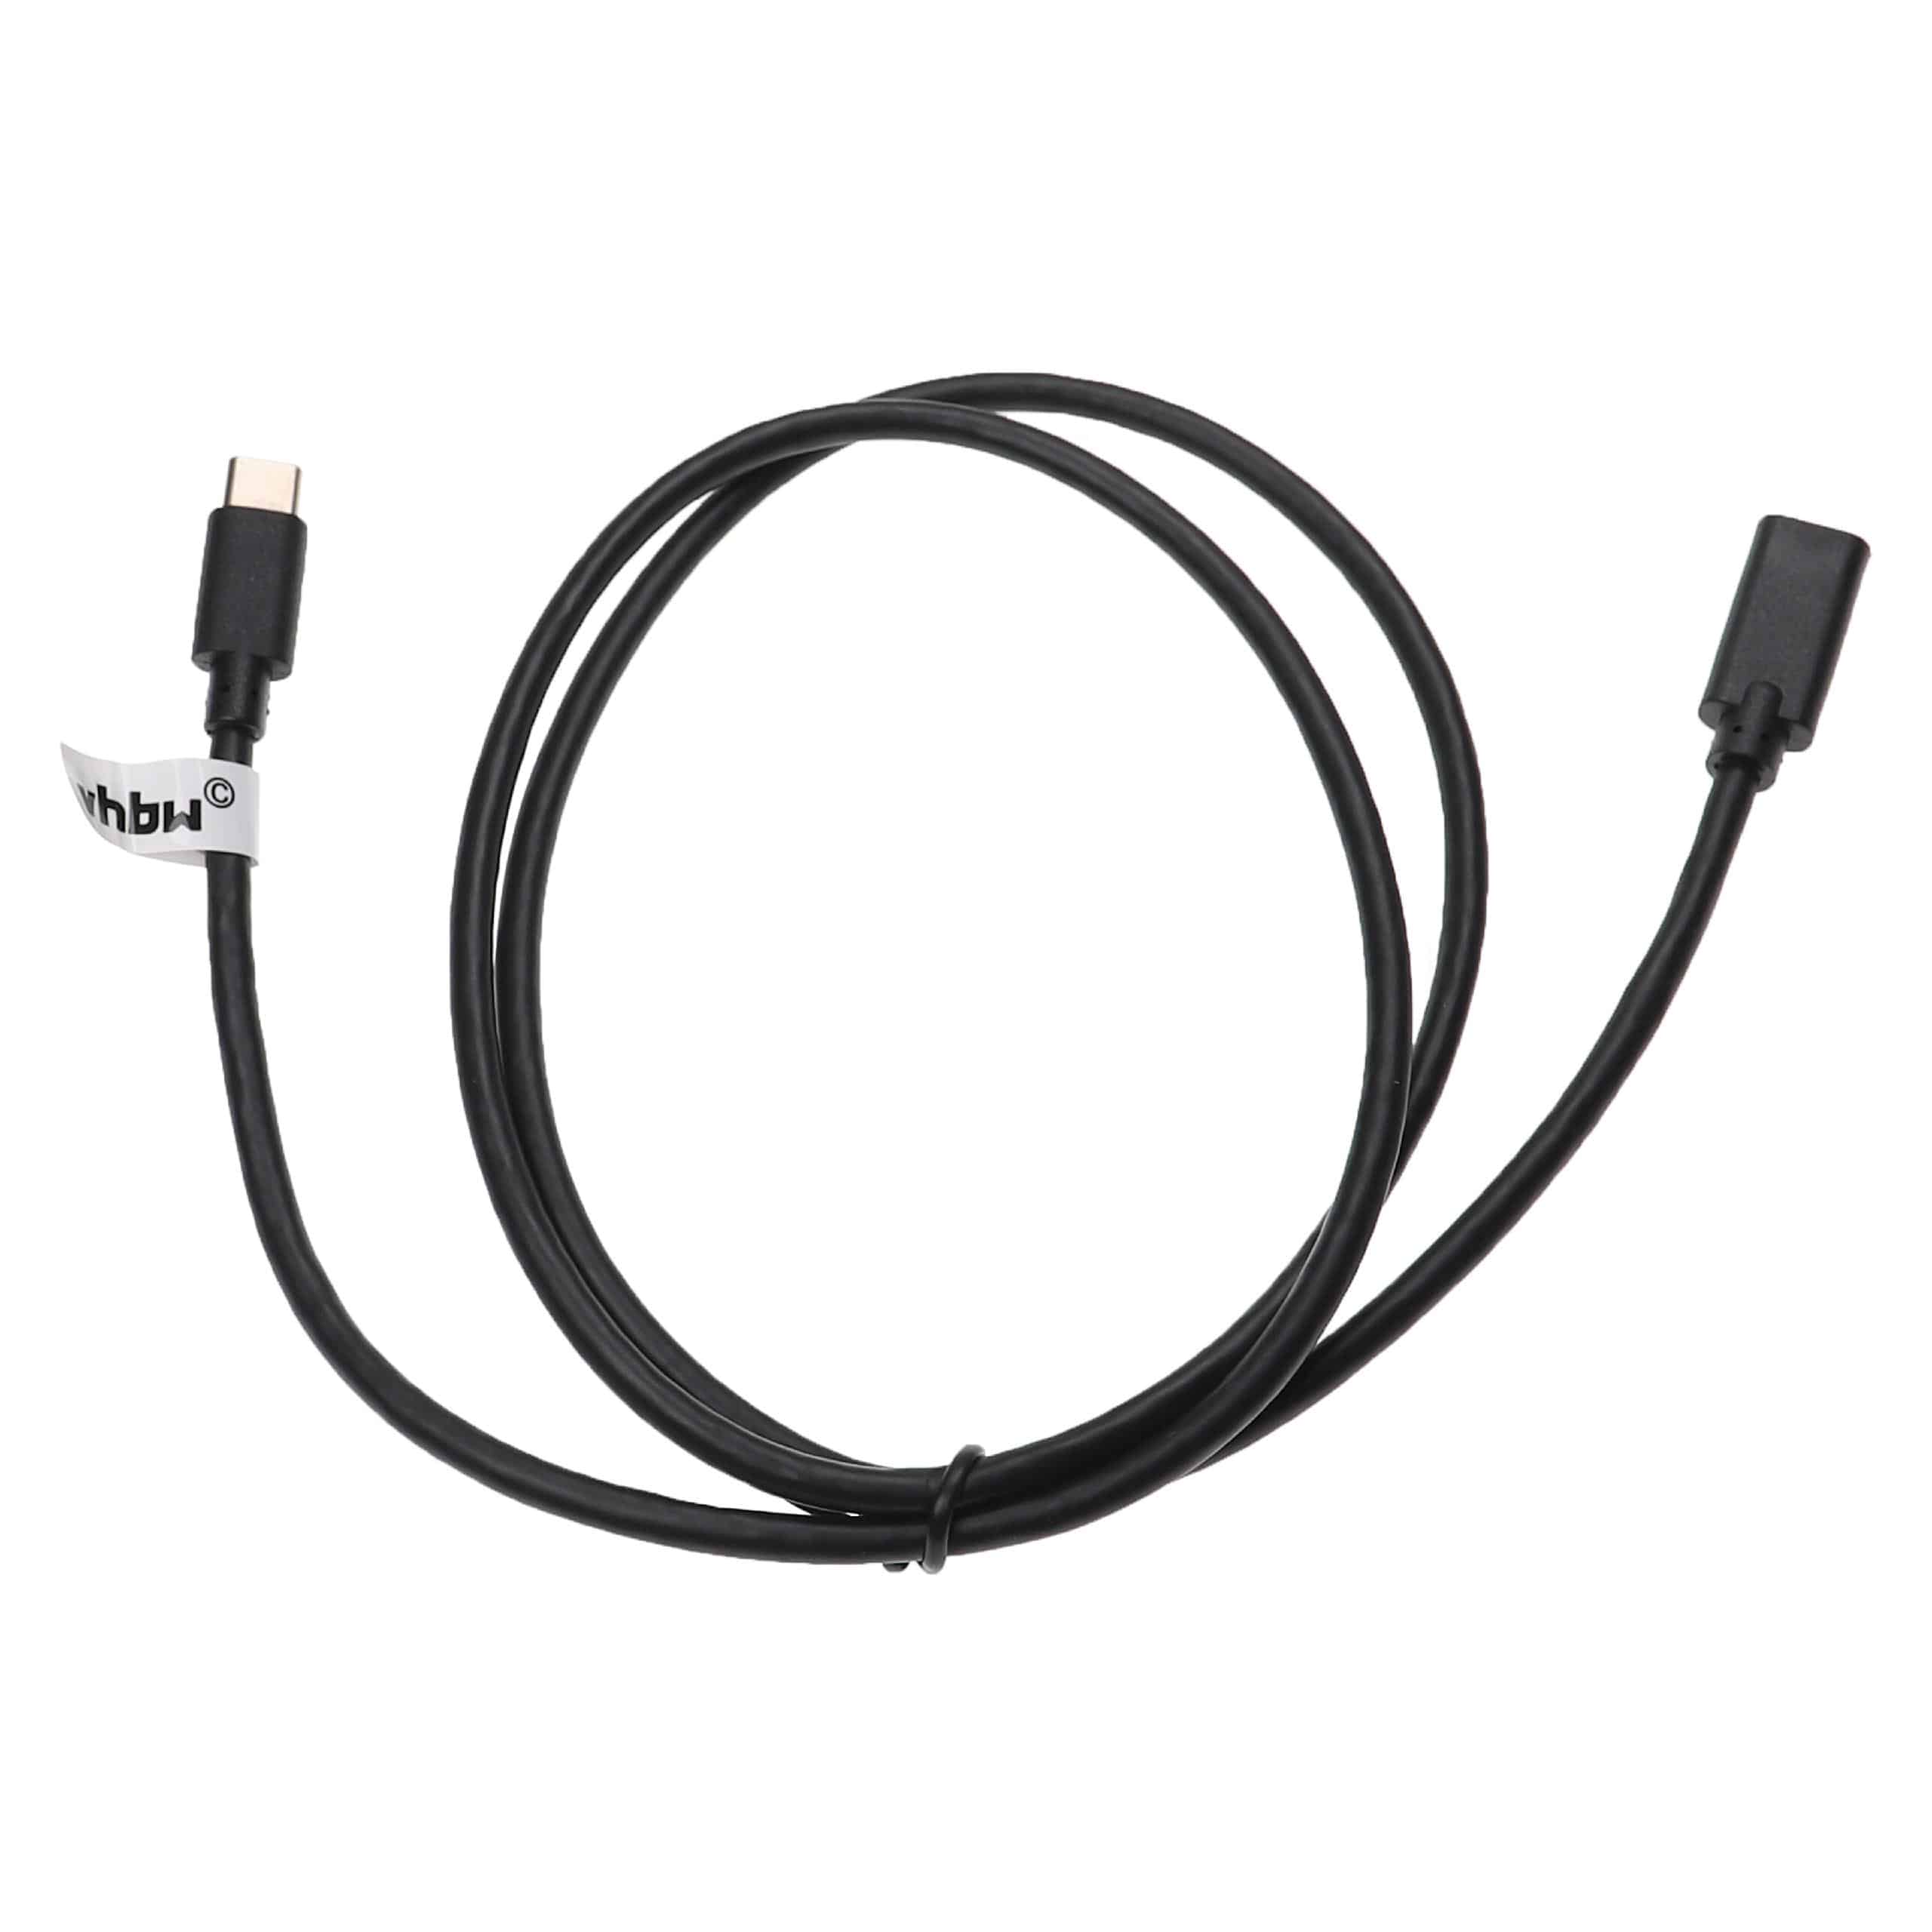 Cable alargador USB-C para diversas tablets, notebooks - 1 m negro, cable USB 3.1 C